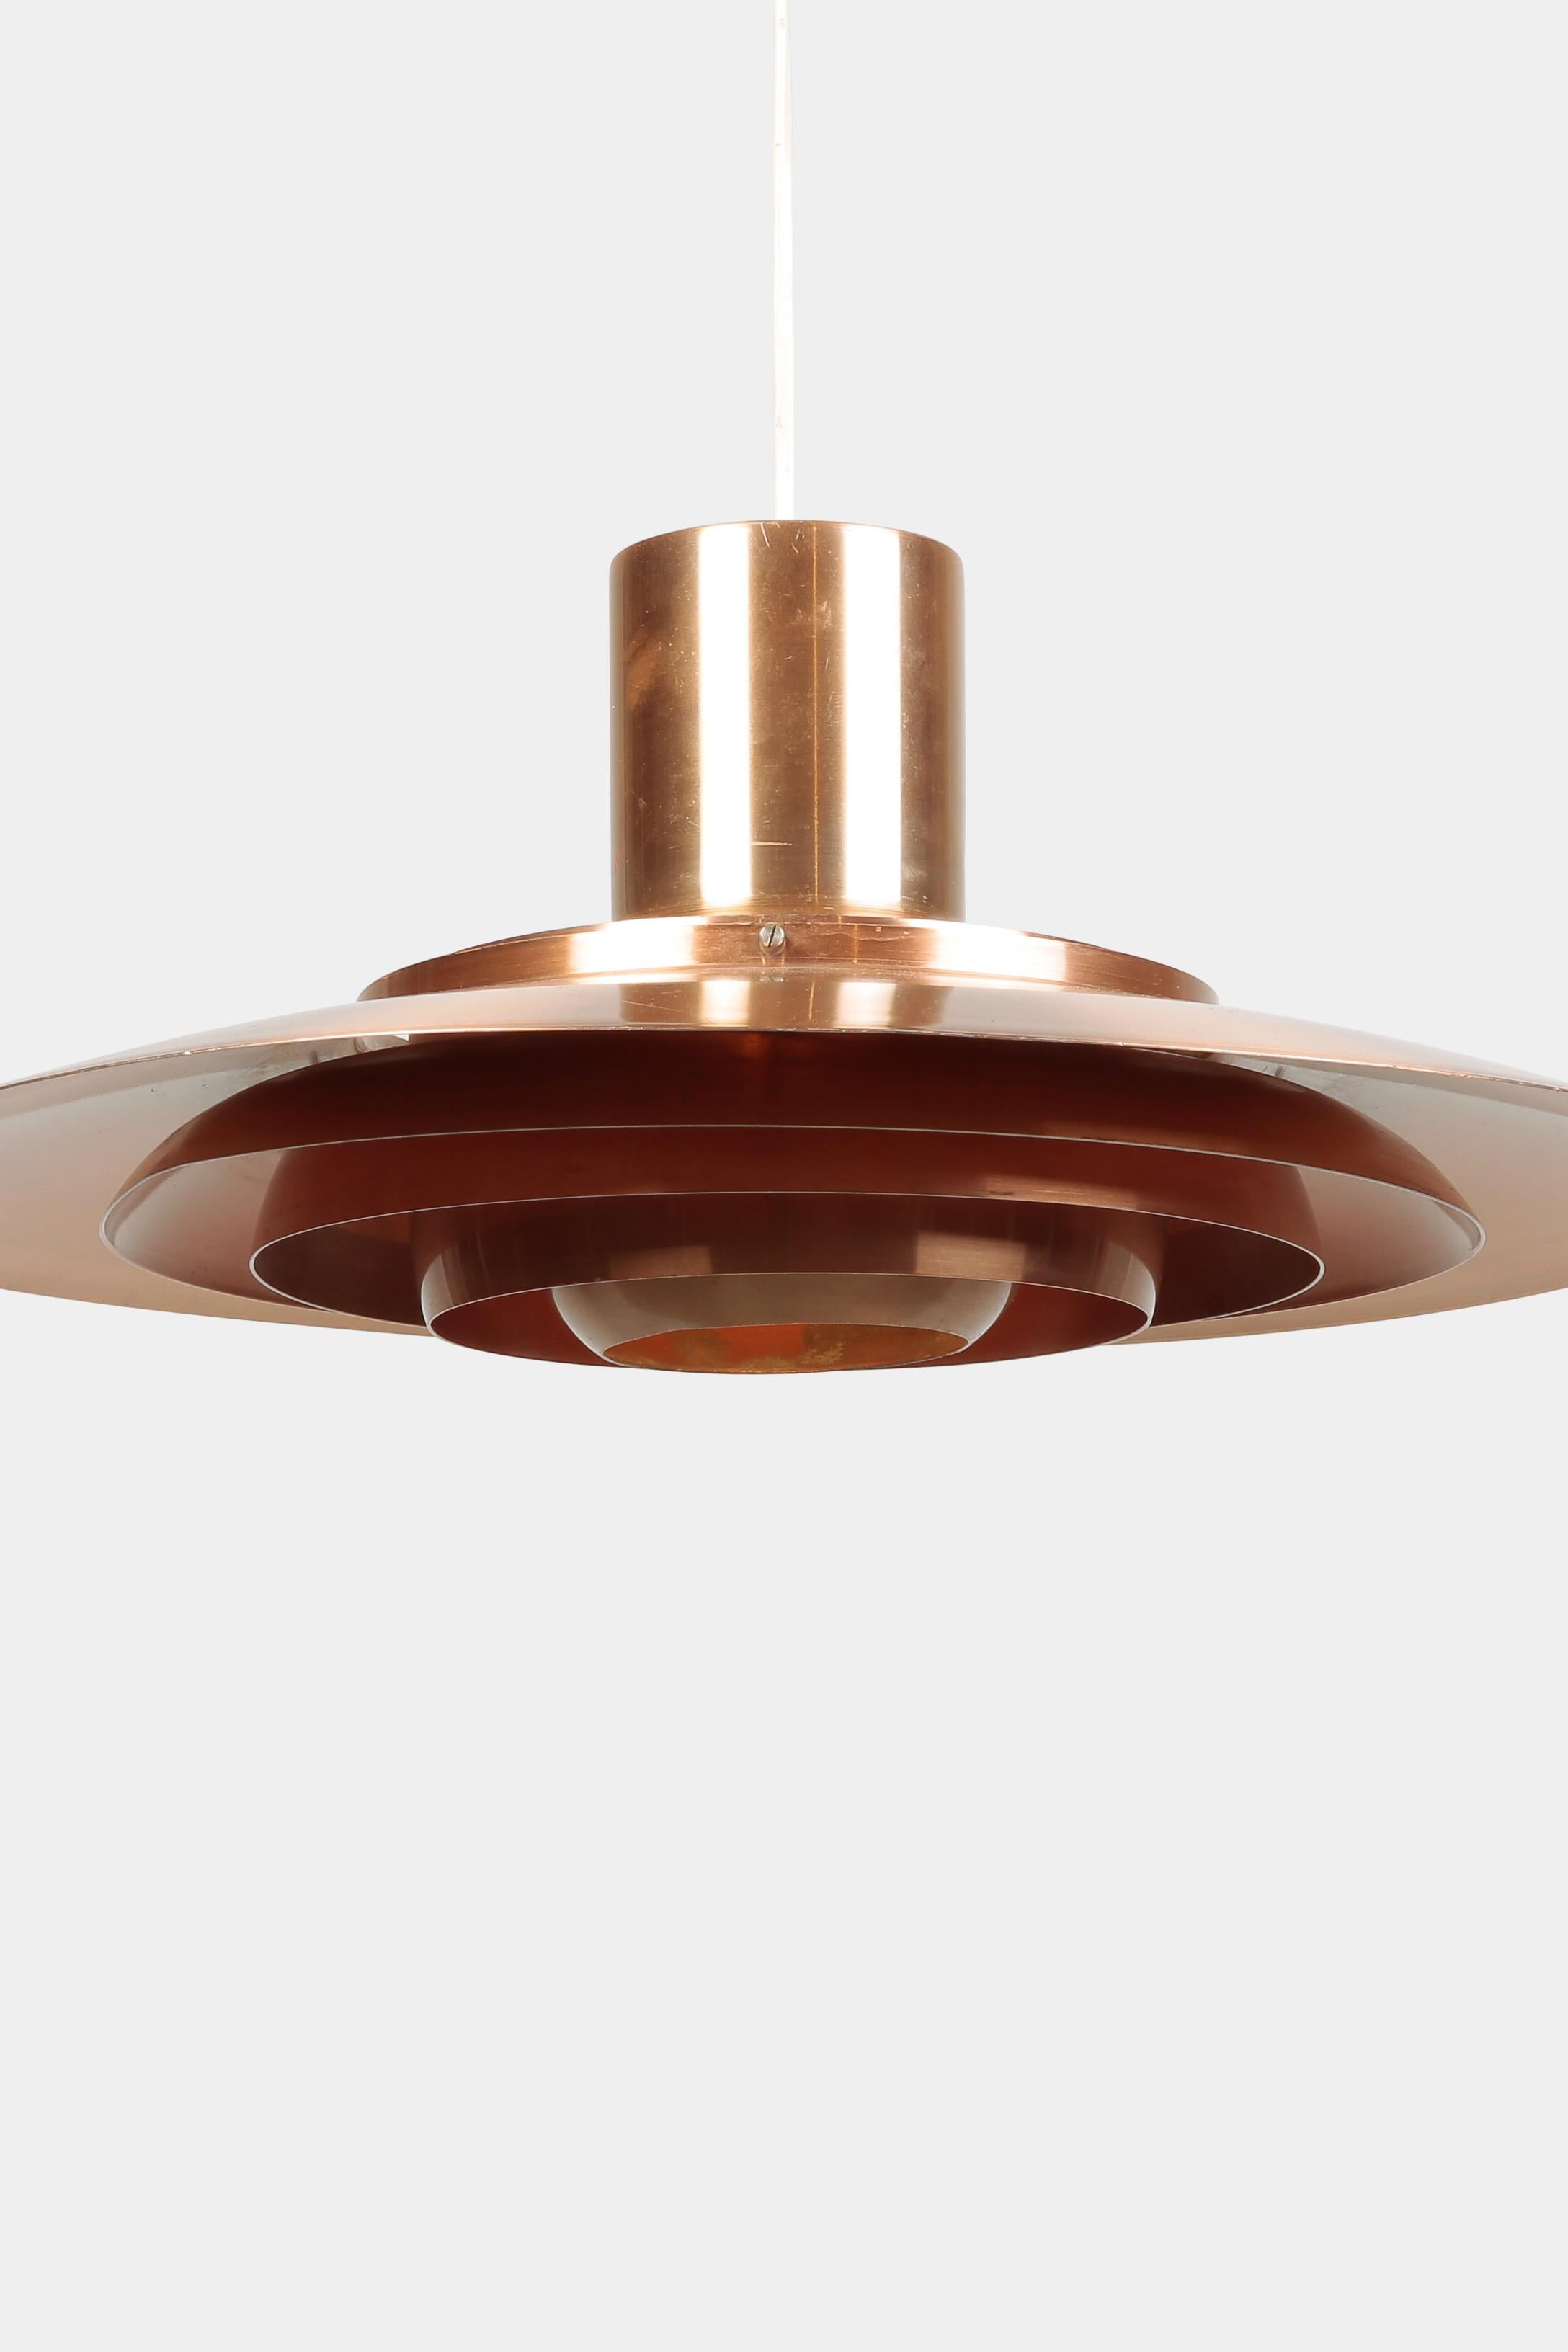 Danish Fabricius & Kastholm Ceiling Lamp Copper P 376 For Sale